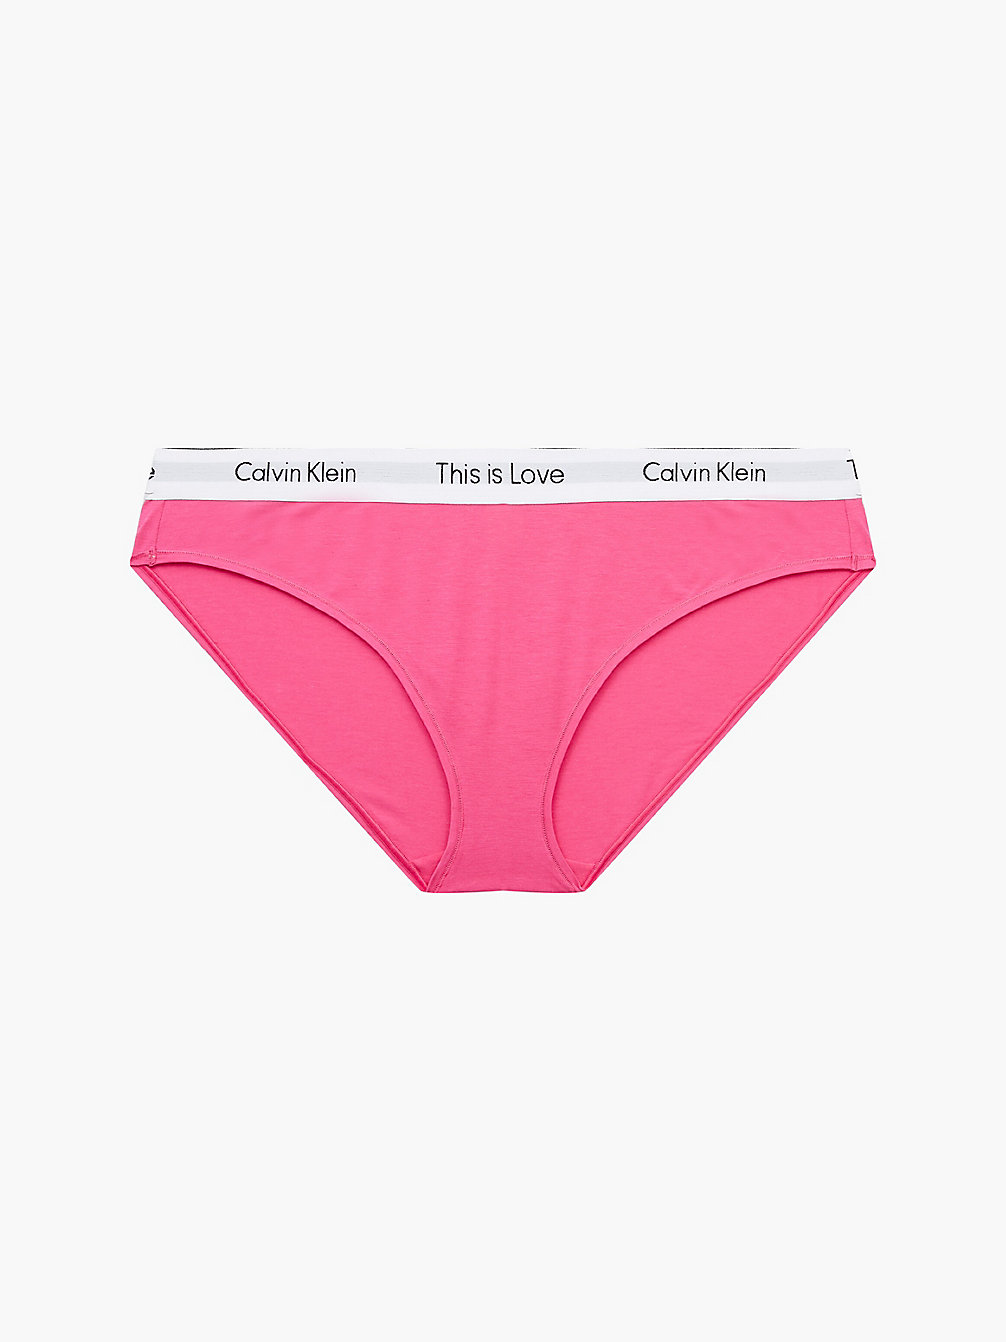 Culotte Grande Taille - Pride > PINK FLAMBE > undefined femmes > Calvin Klein